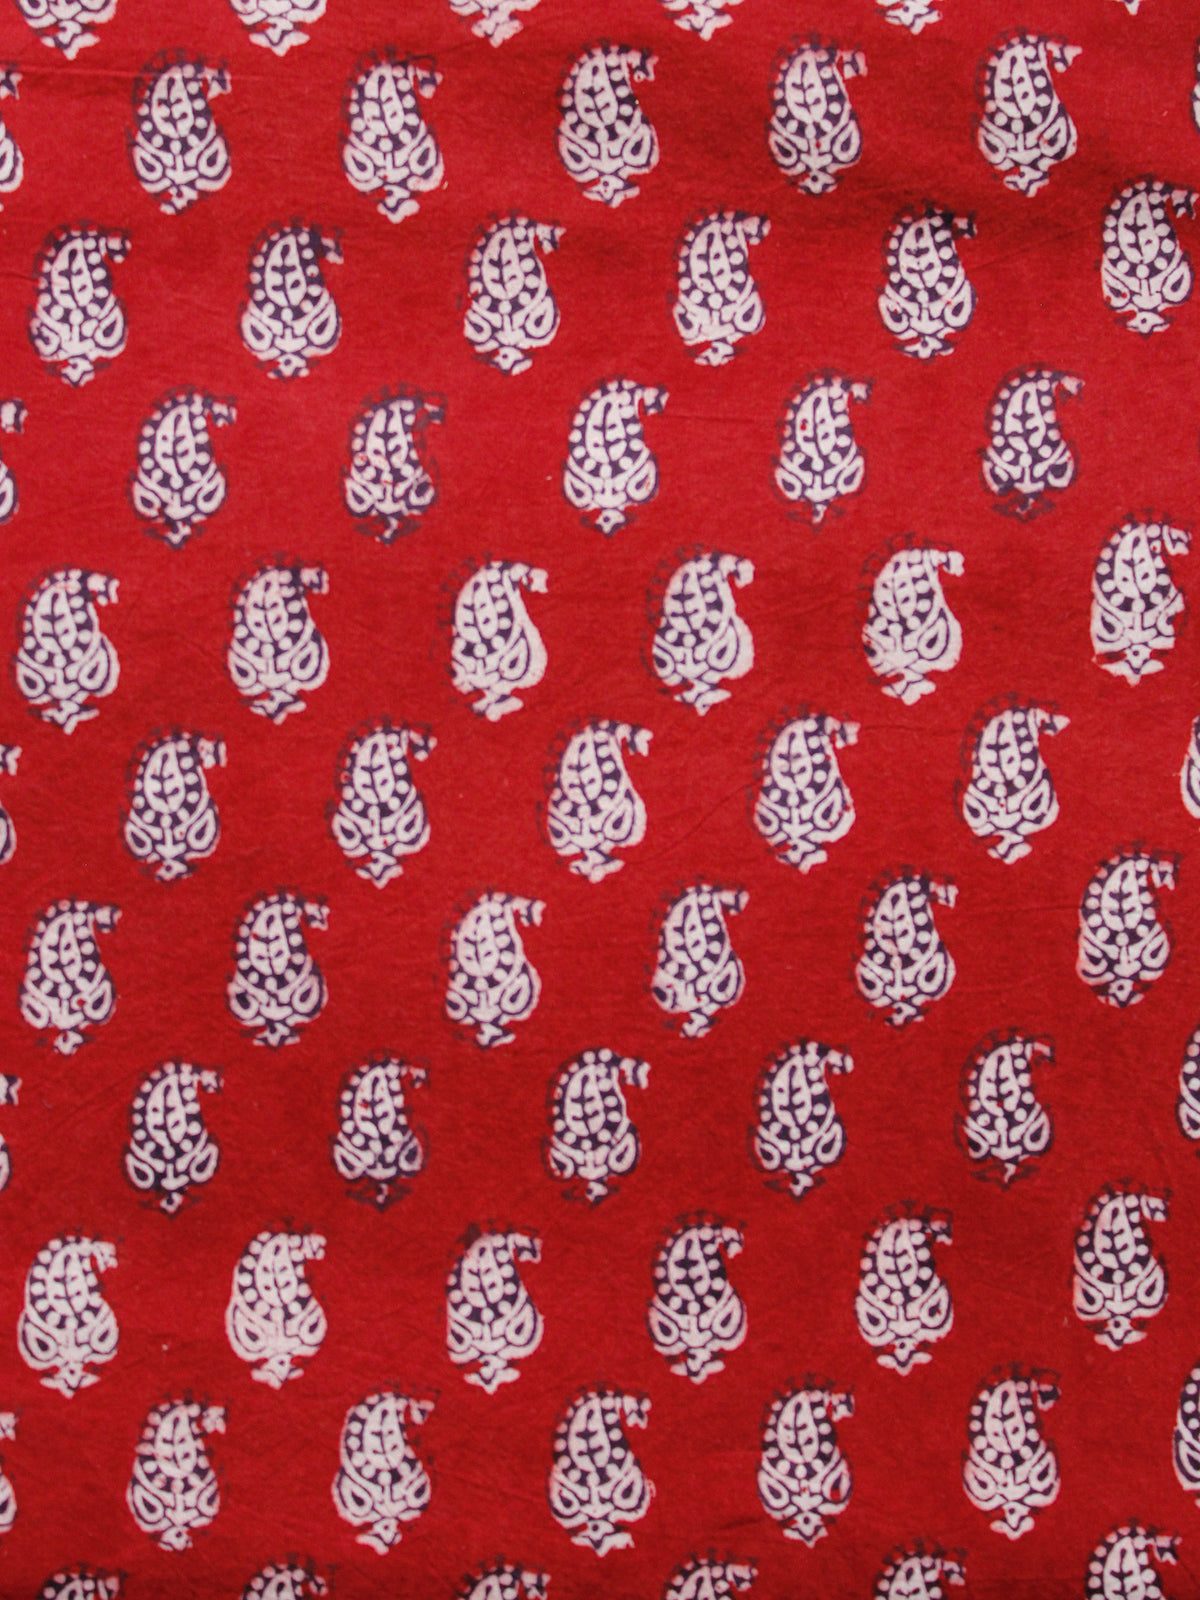 Red Black Beige Bagh Printed Cotton Fabric Per Meter - F005F1695